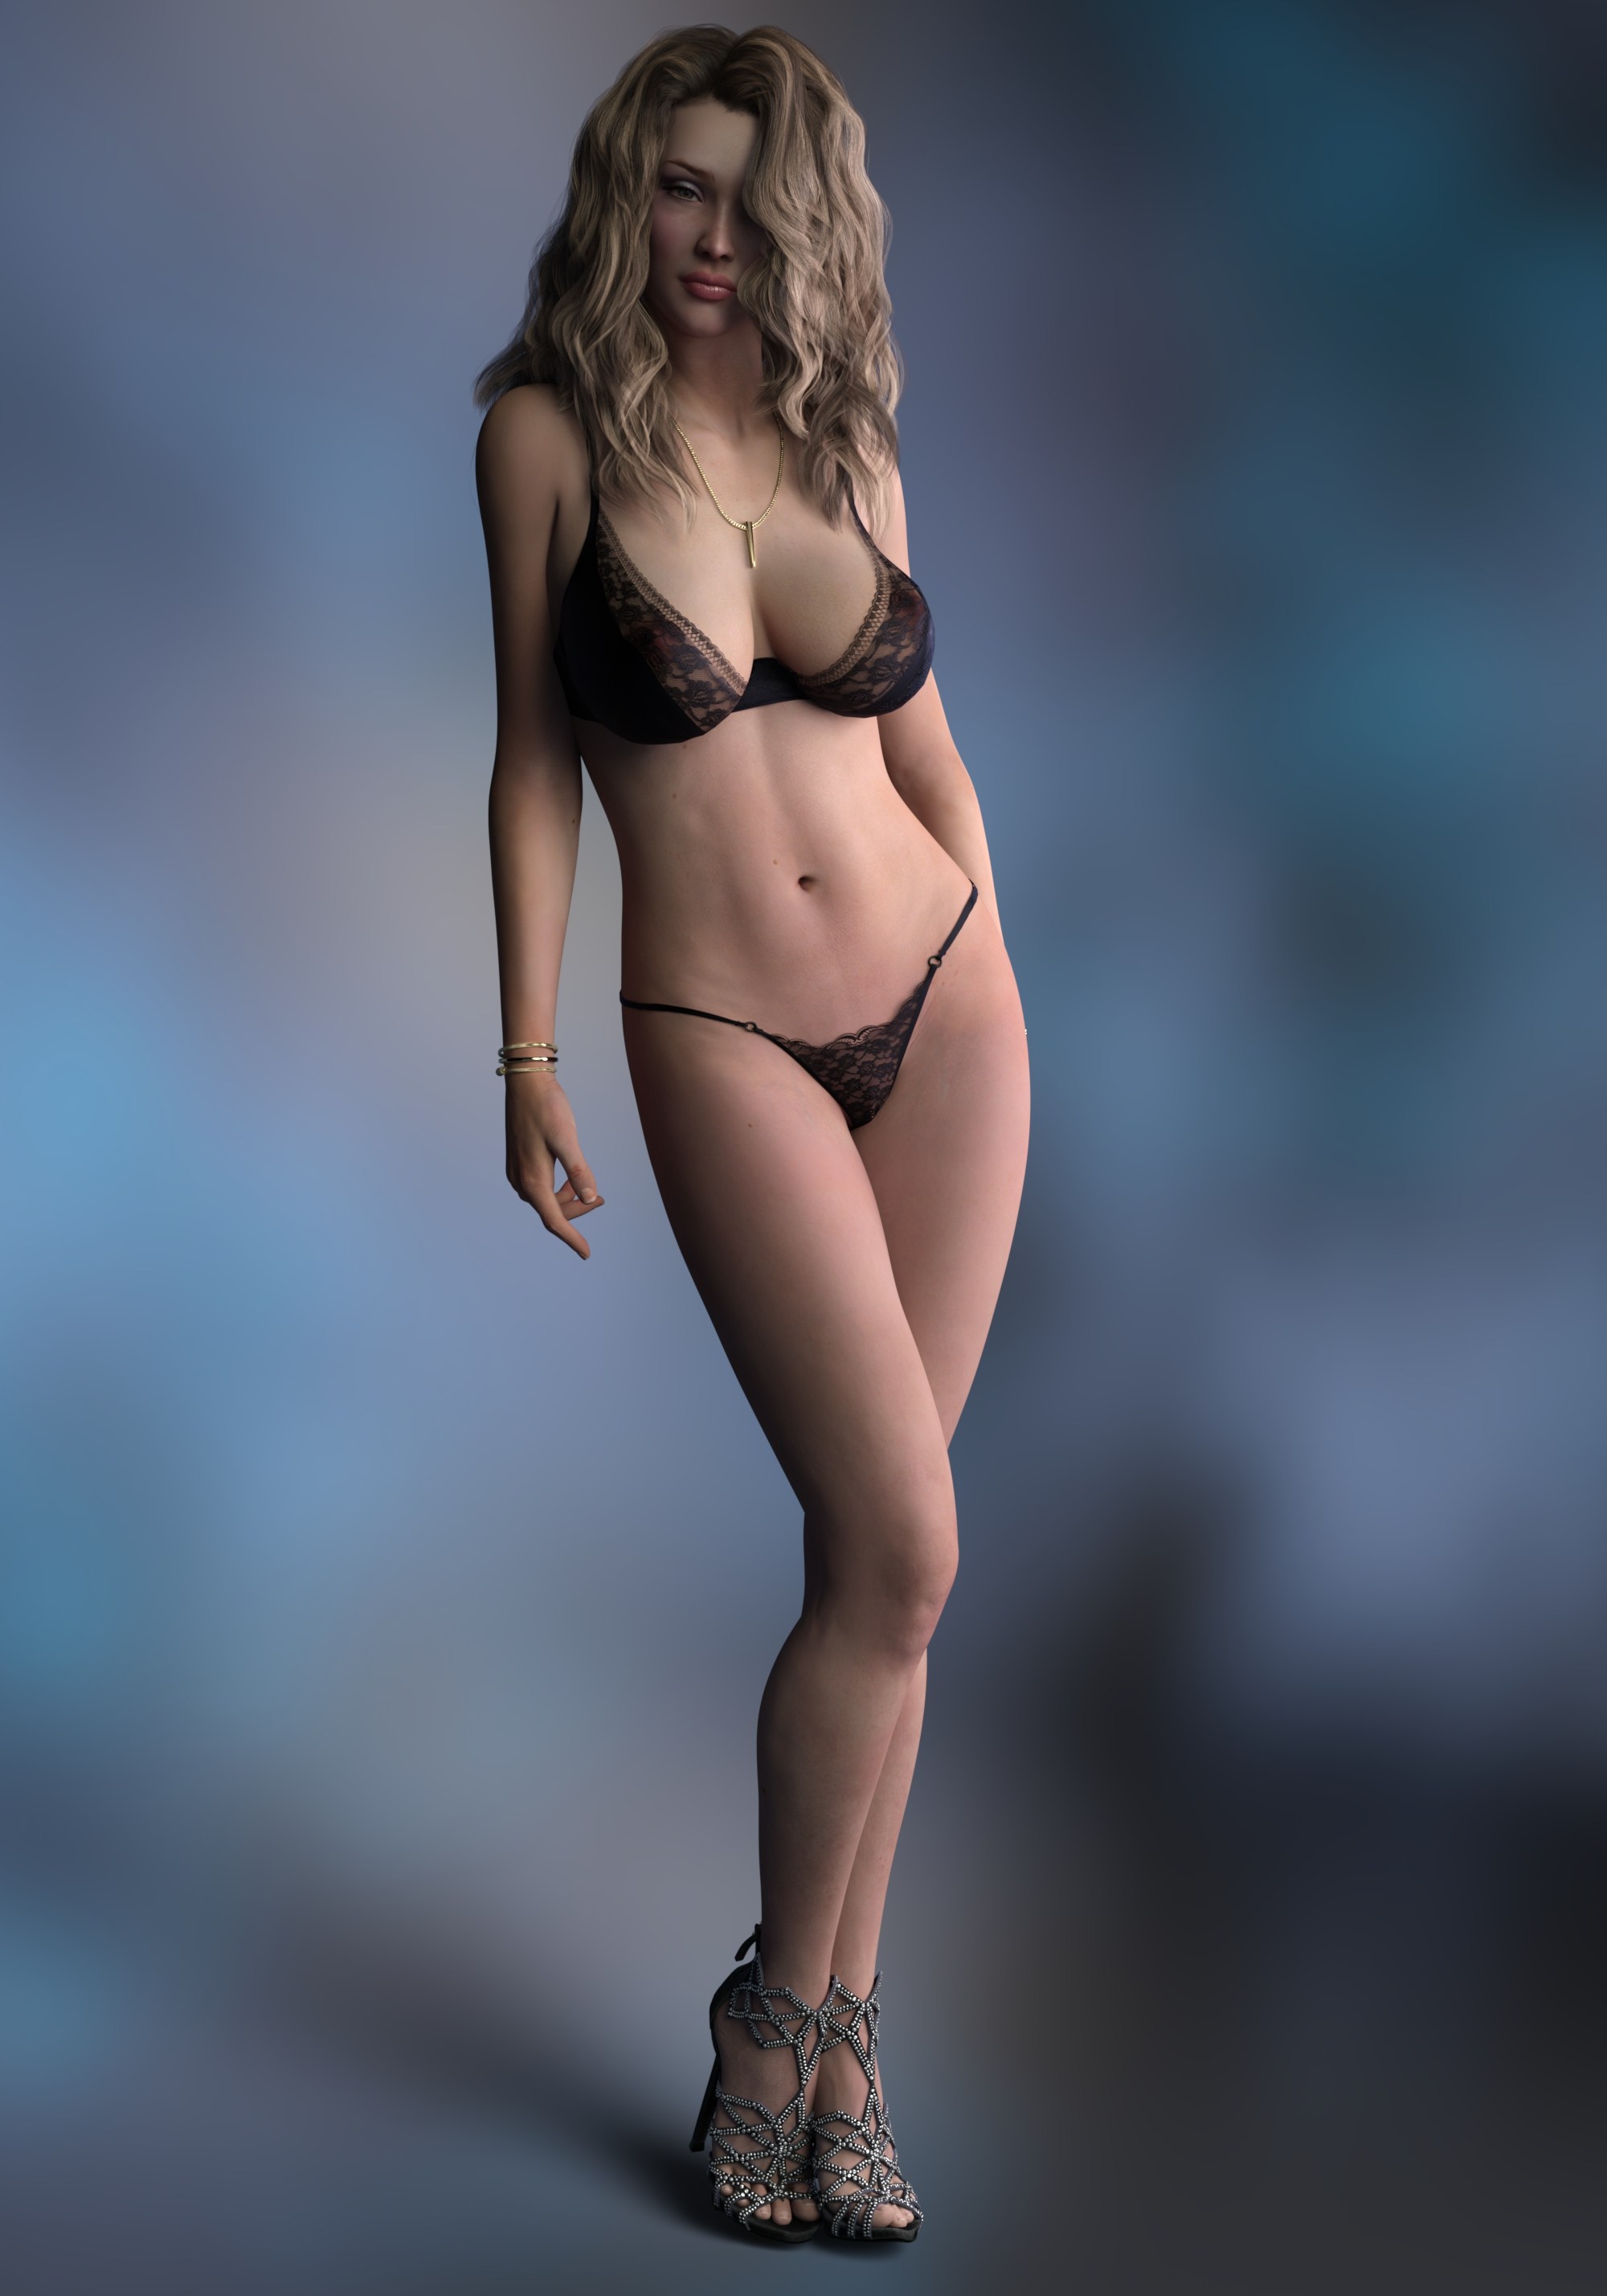 Midget Girl Tumblr - Naked Midget Women in Sexy Lingerie (63 photos) - sex eporner pics